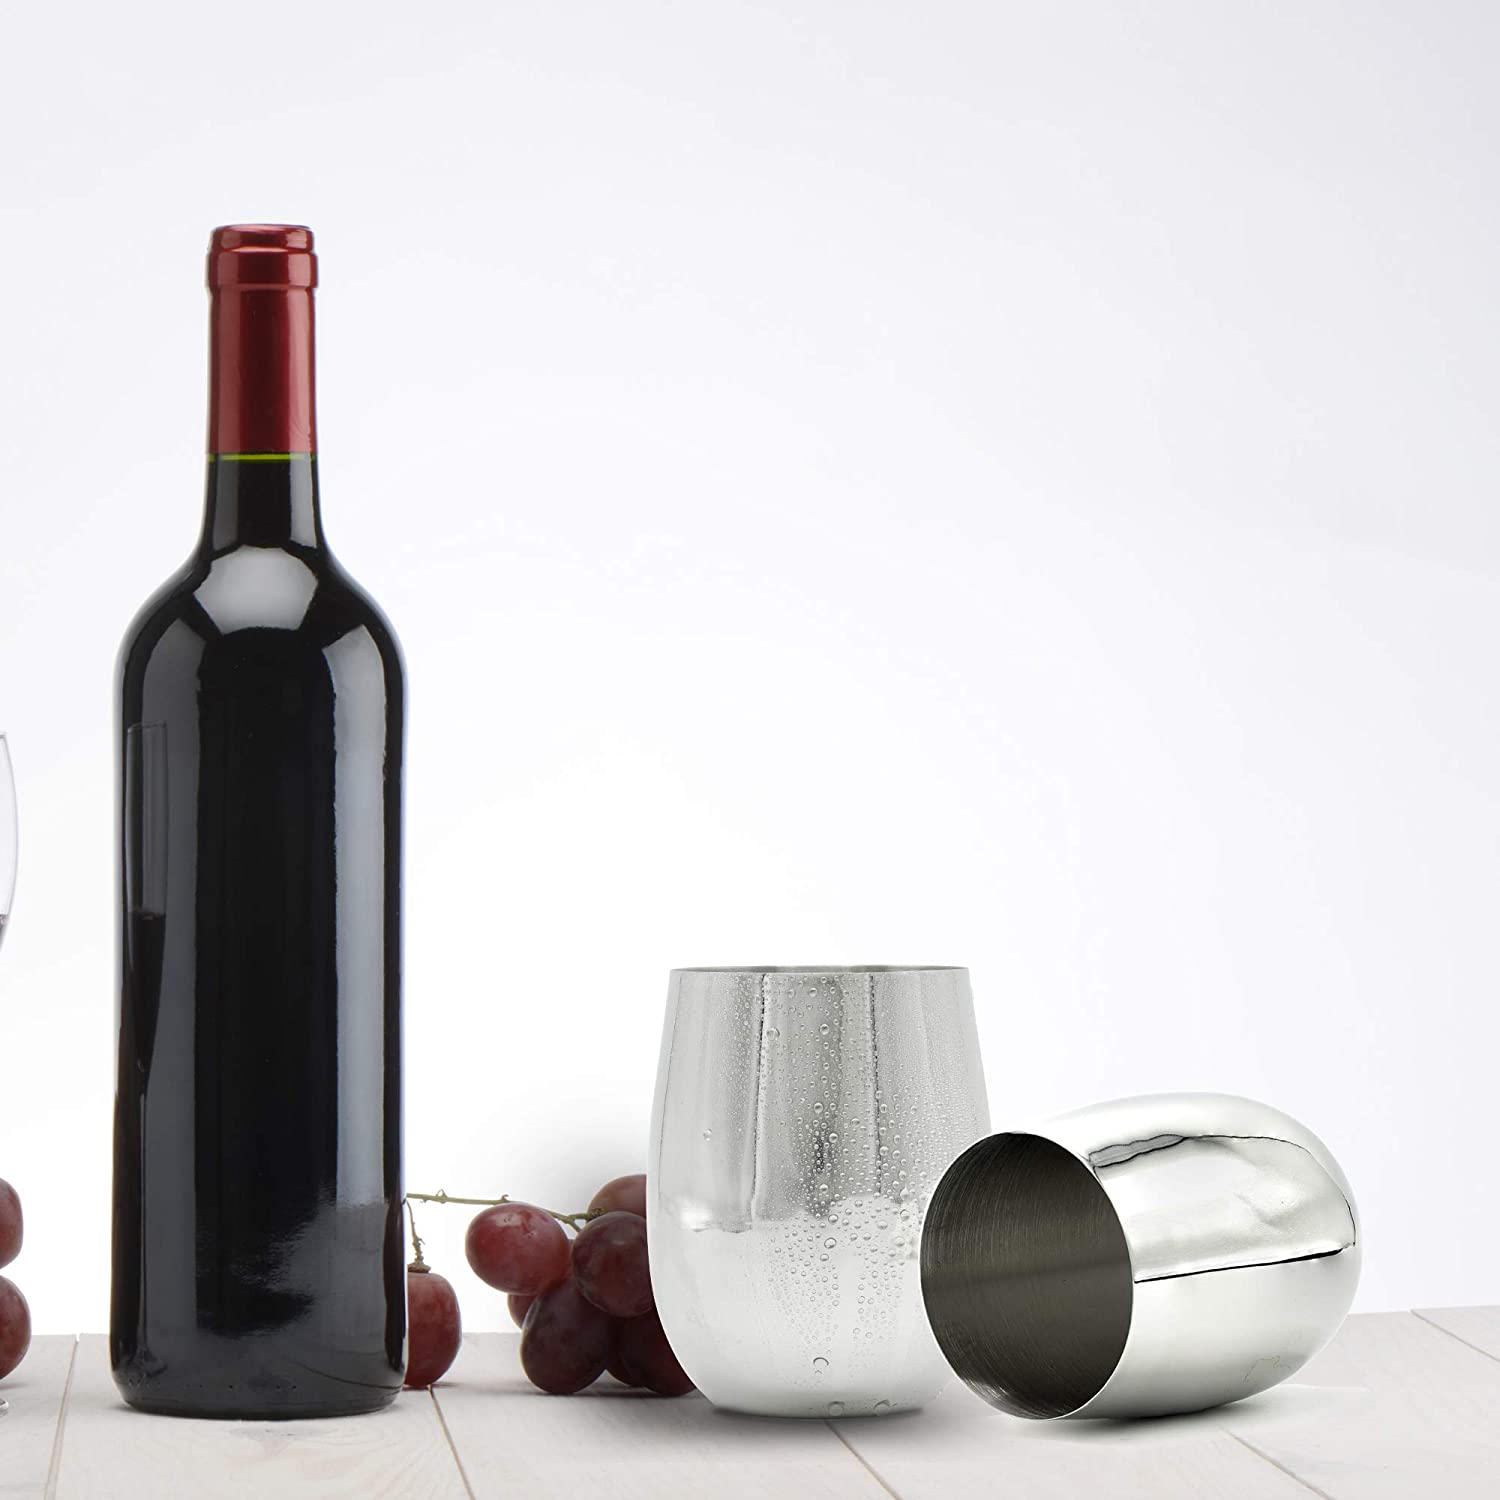 Bezrat Stainless Steel Wine Glasses: 2-Pack Unbreakable Stemless Wine